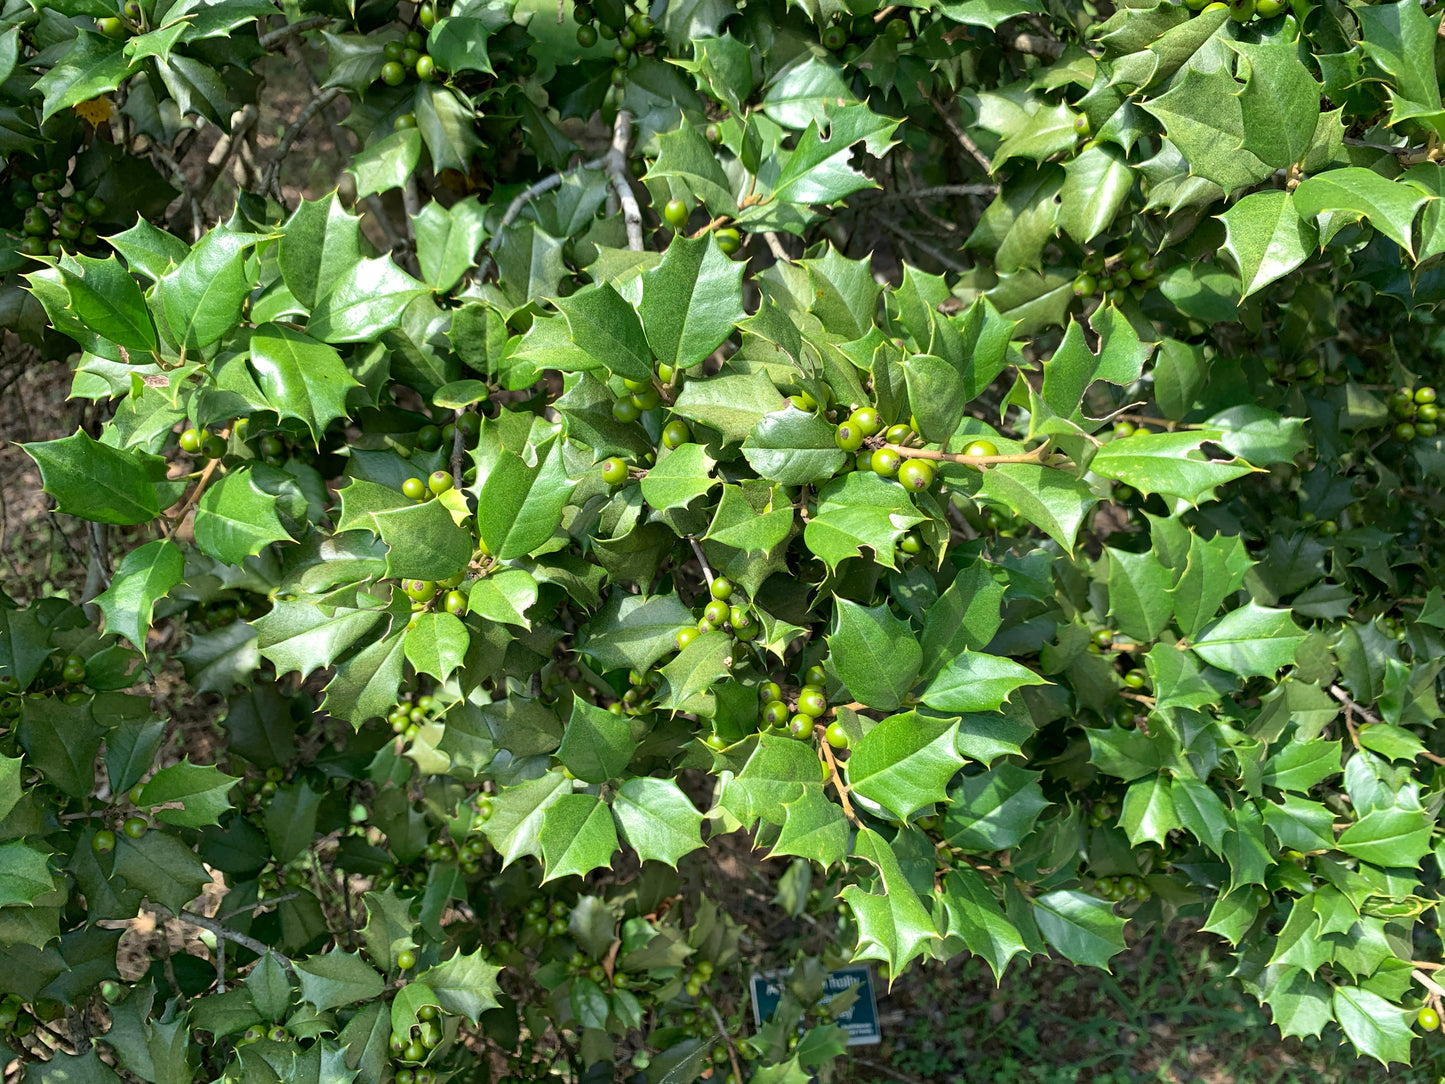 40 AMERICAN HOLLY Ilex Opaca Tree Shrub Evergreen Red Berry Seeds - aka White Holly, Prickly Holly, Christmas Holly, Yule Holly